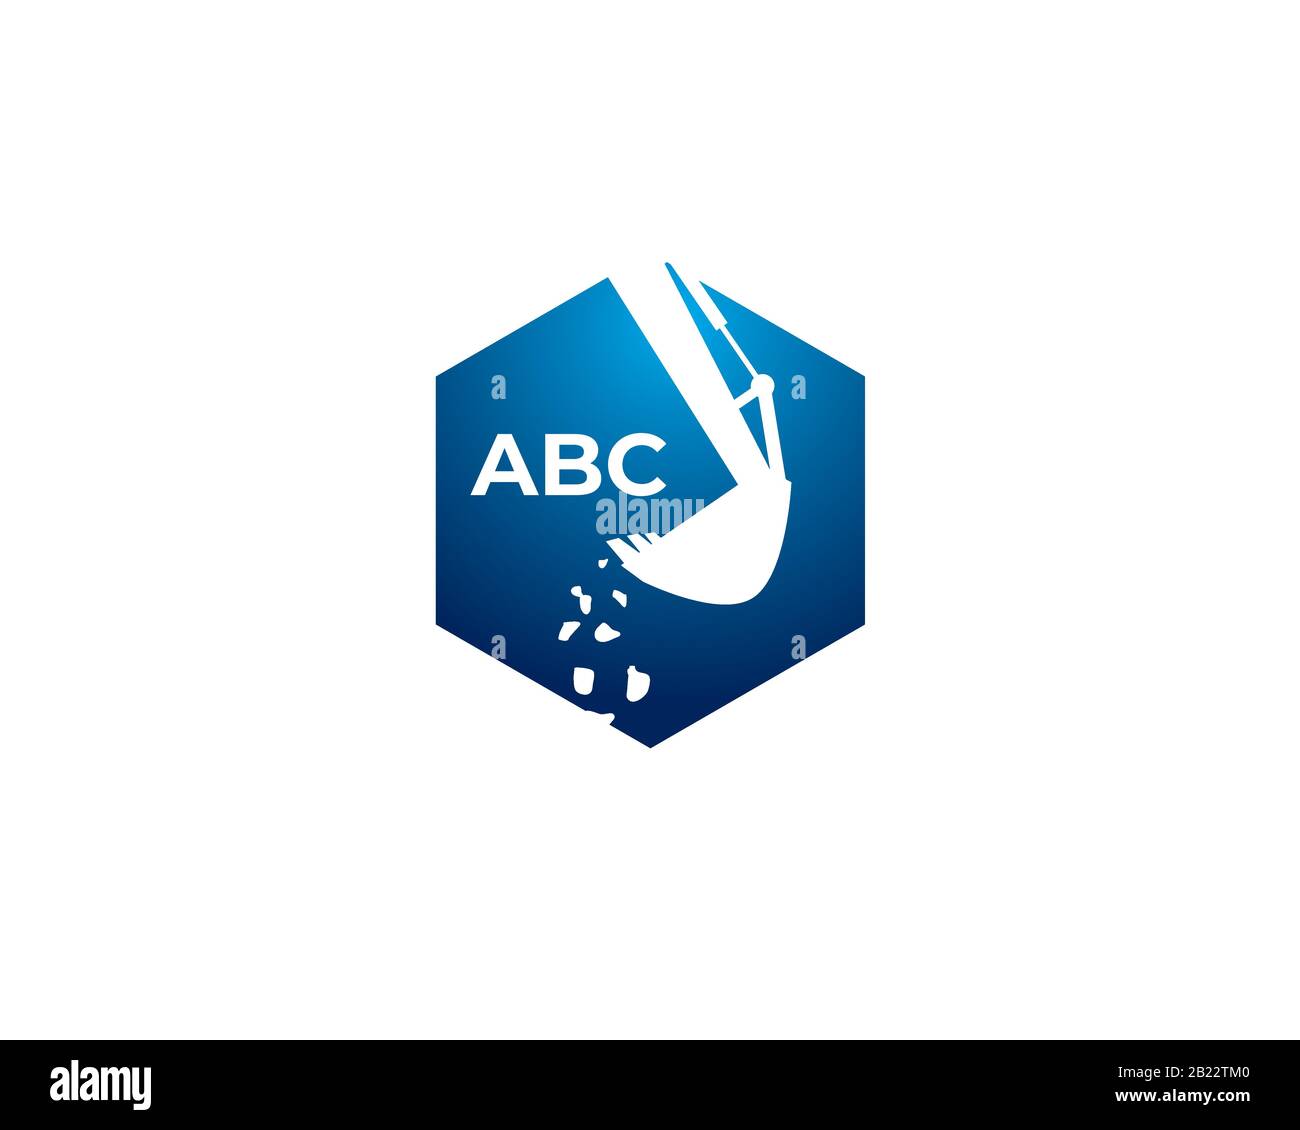 hexagon exacavator and backhoe emblem logo template with alphabeth logotype Stock Vector